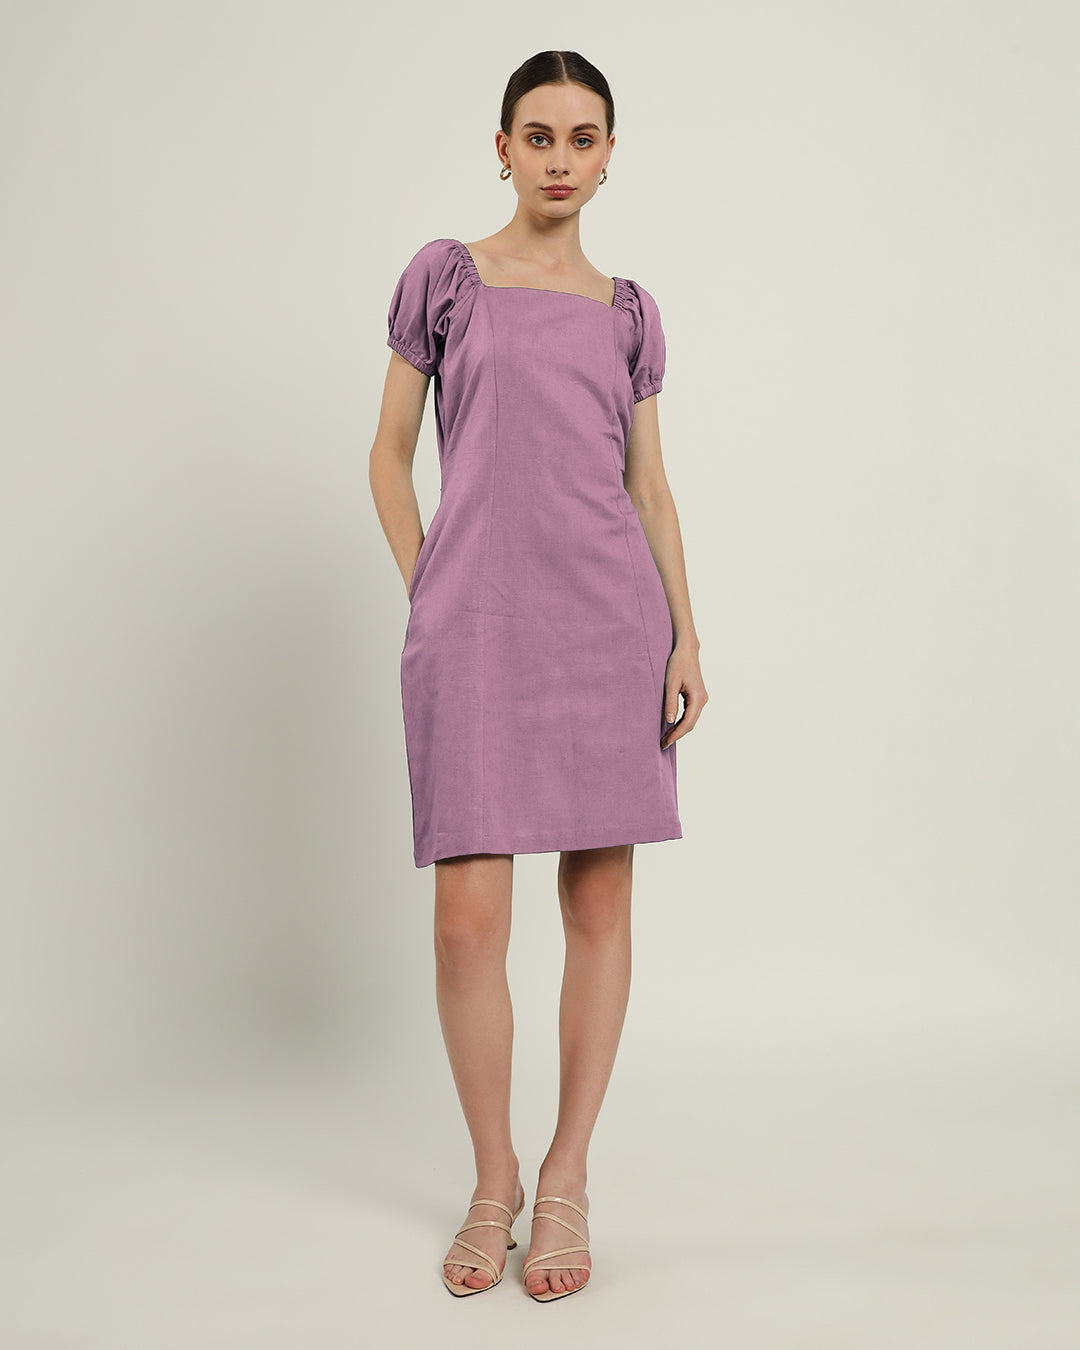 The Arar Purple Swirl Cotton Dress